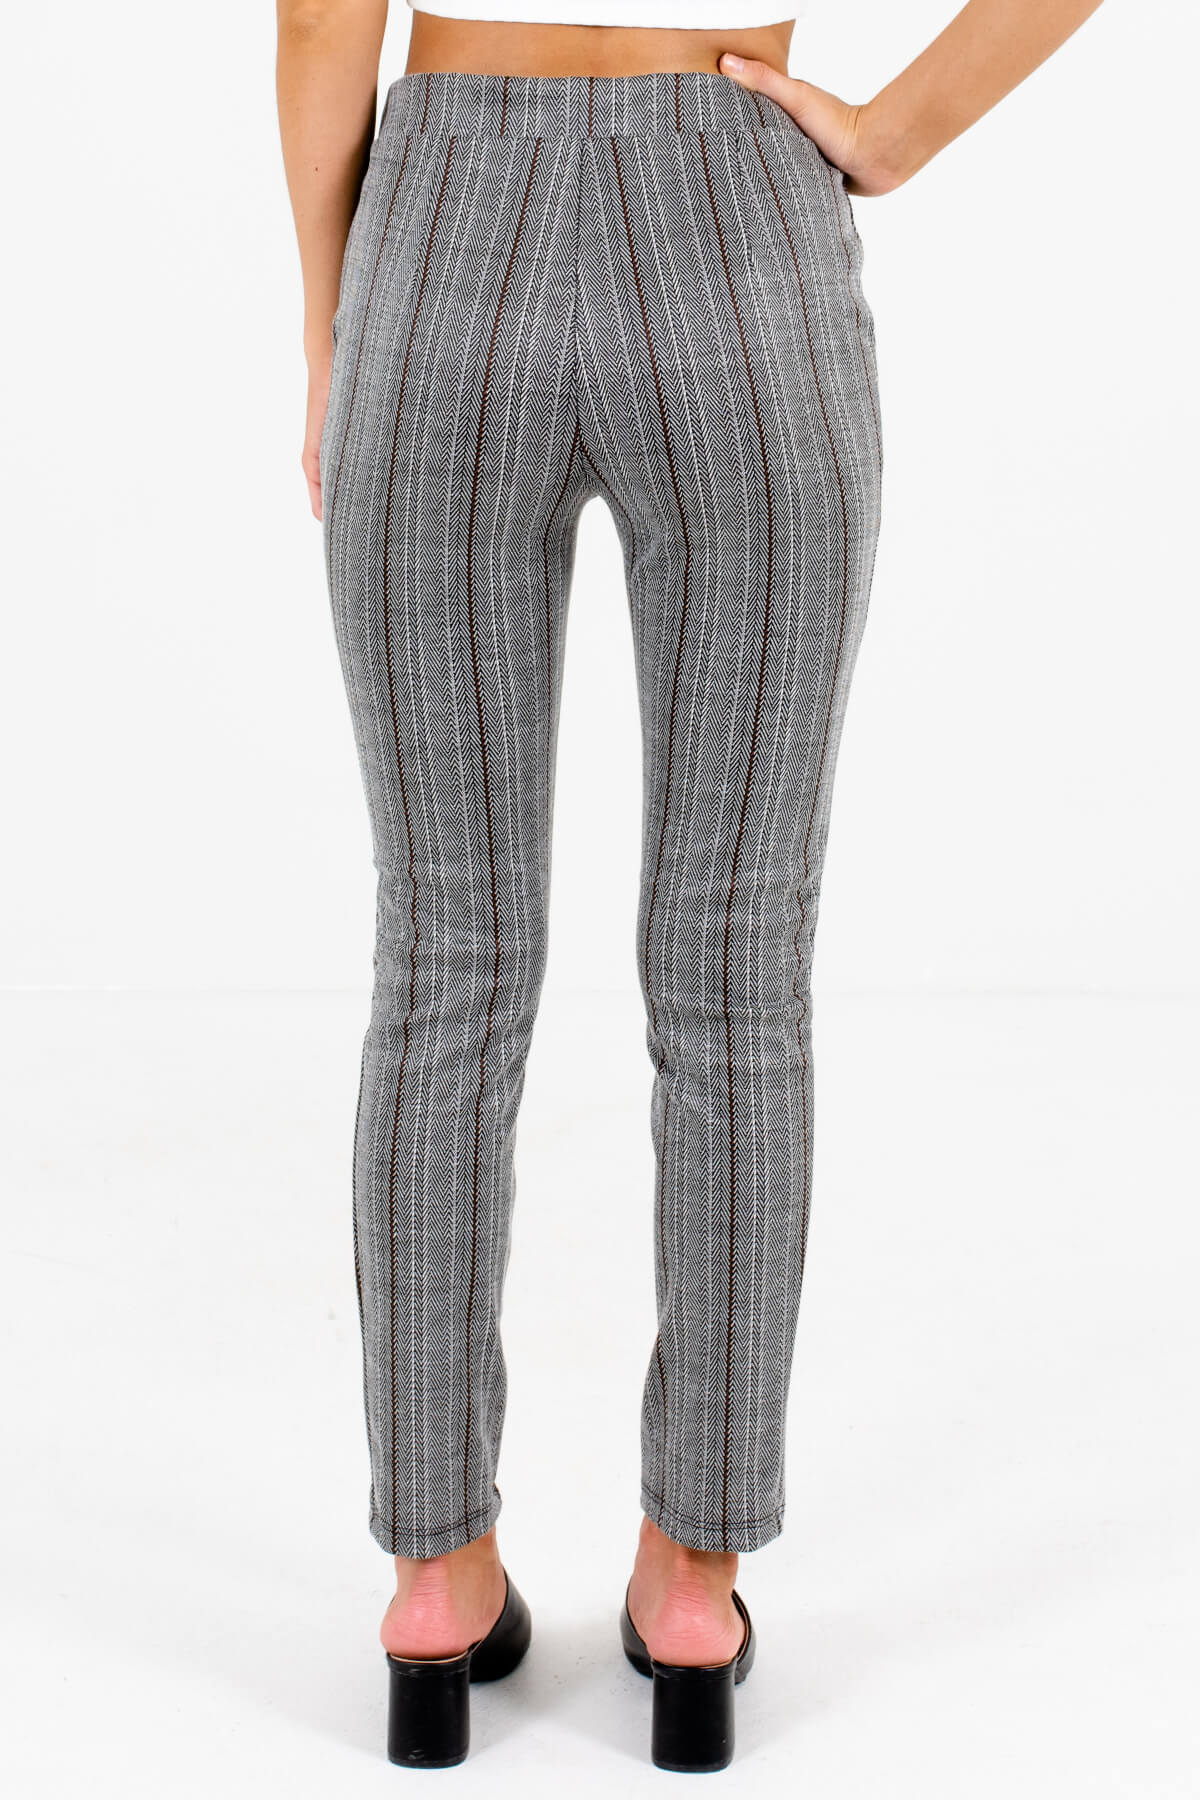 Women's Gray Elastic Waistband Boutique Pants